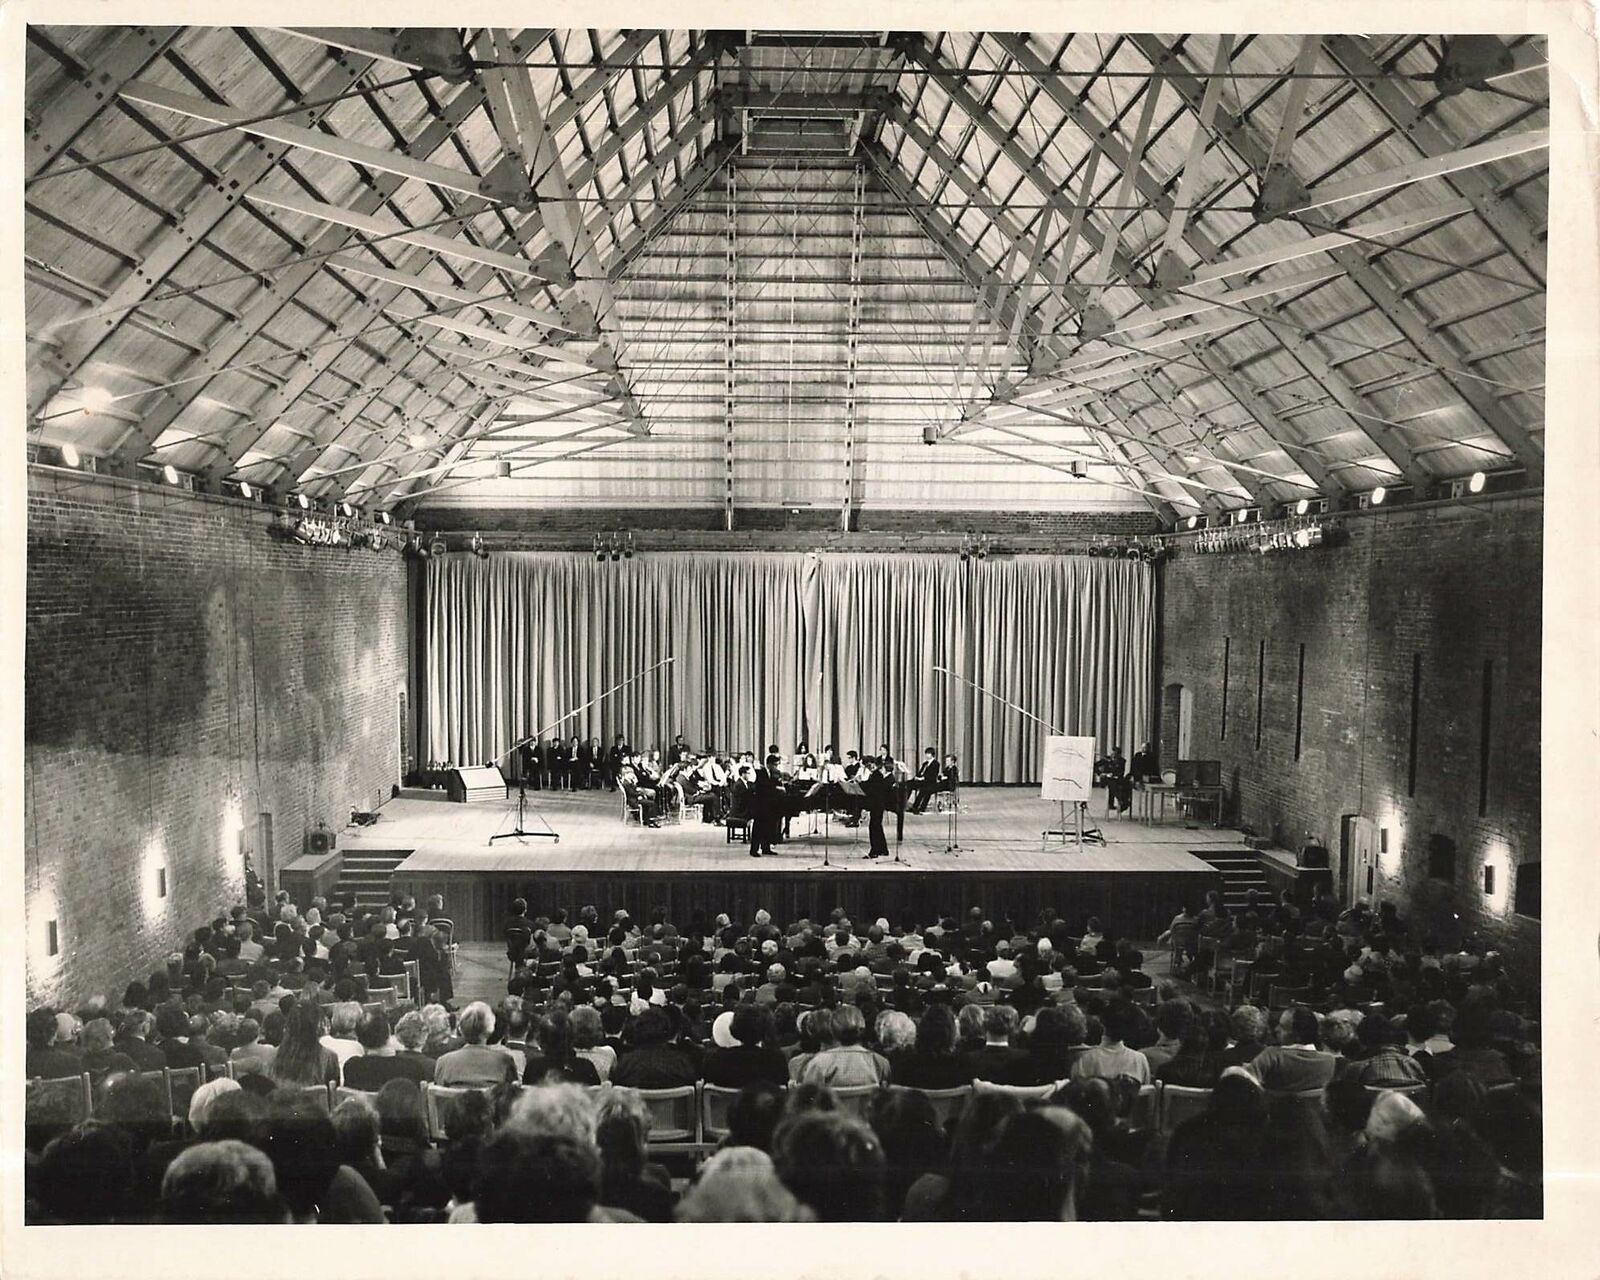 1970 Press Photo Acoustics Test Inside Rebuilt Maltings Concert Opera Hall fire